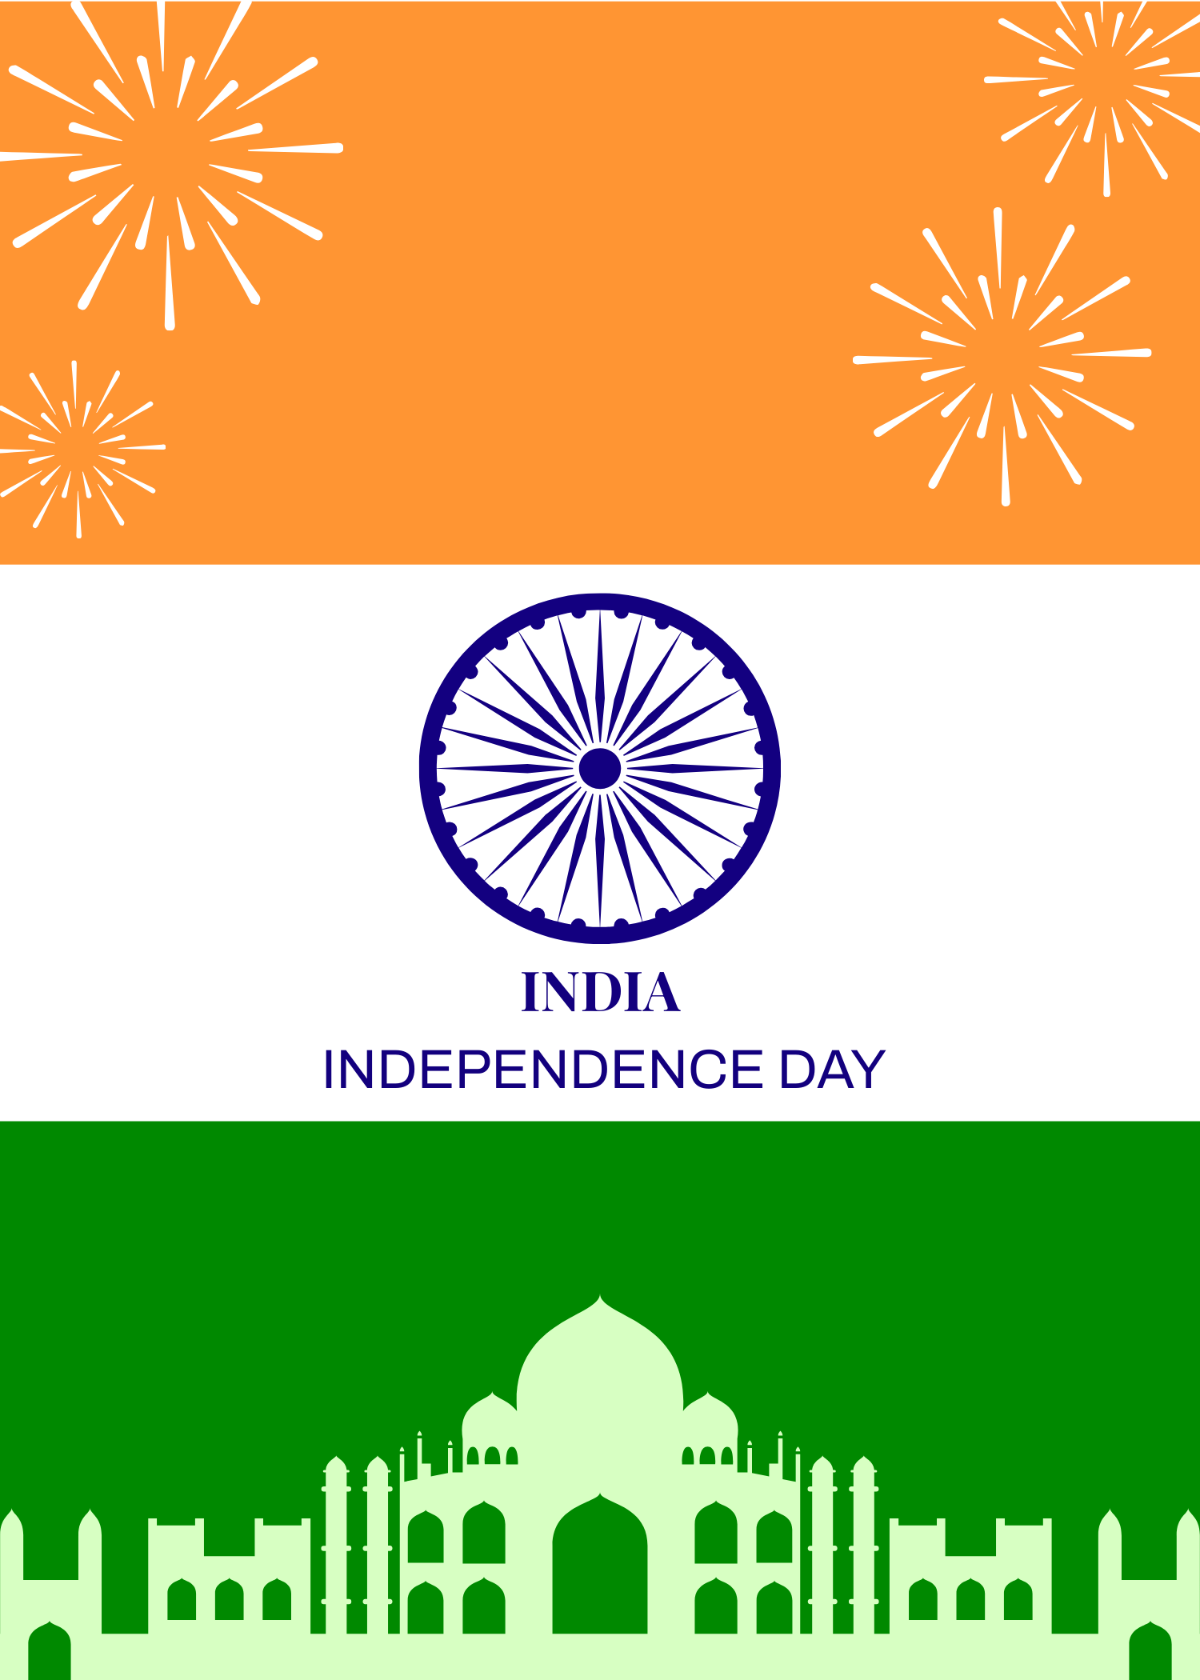 India Independence Day Invitation Background